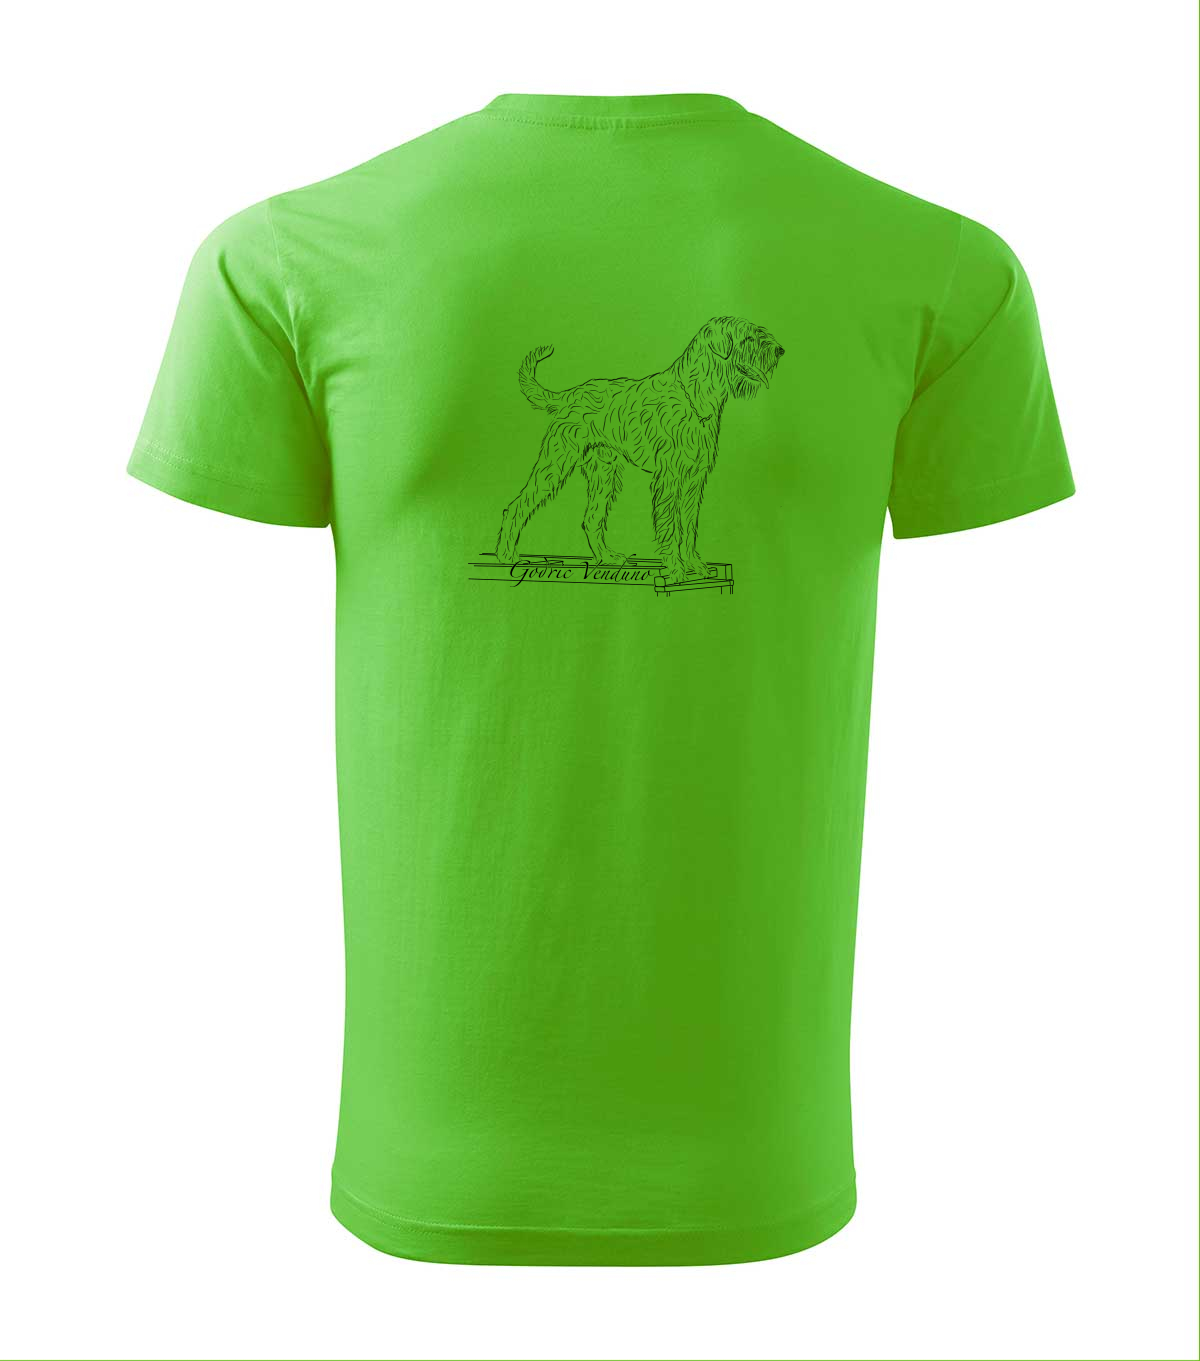 Šlapanický vlk - triko s vlastním motivem - apple green